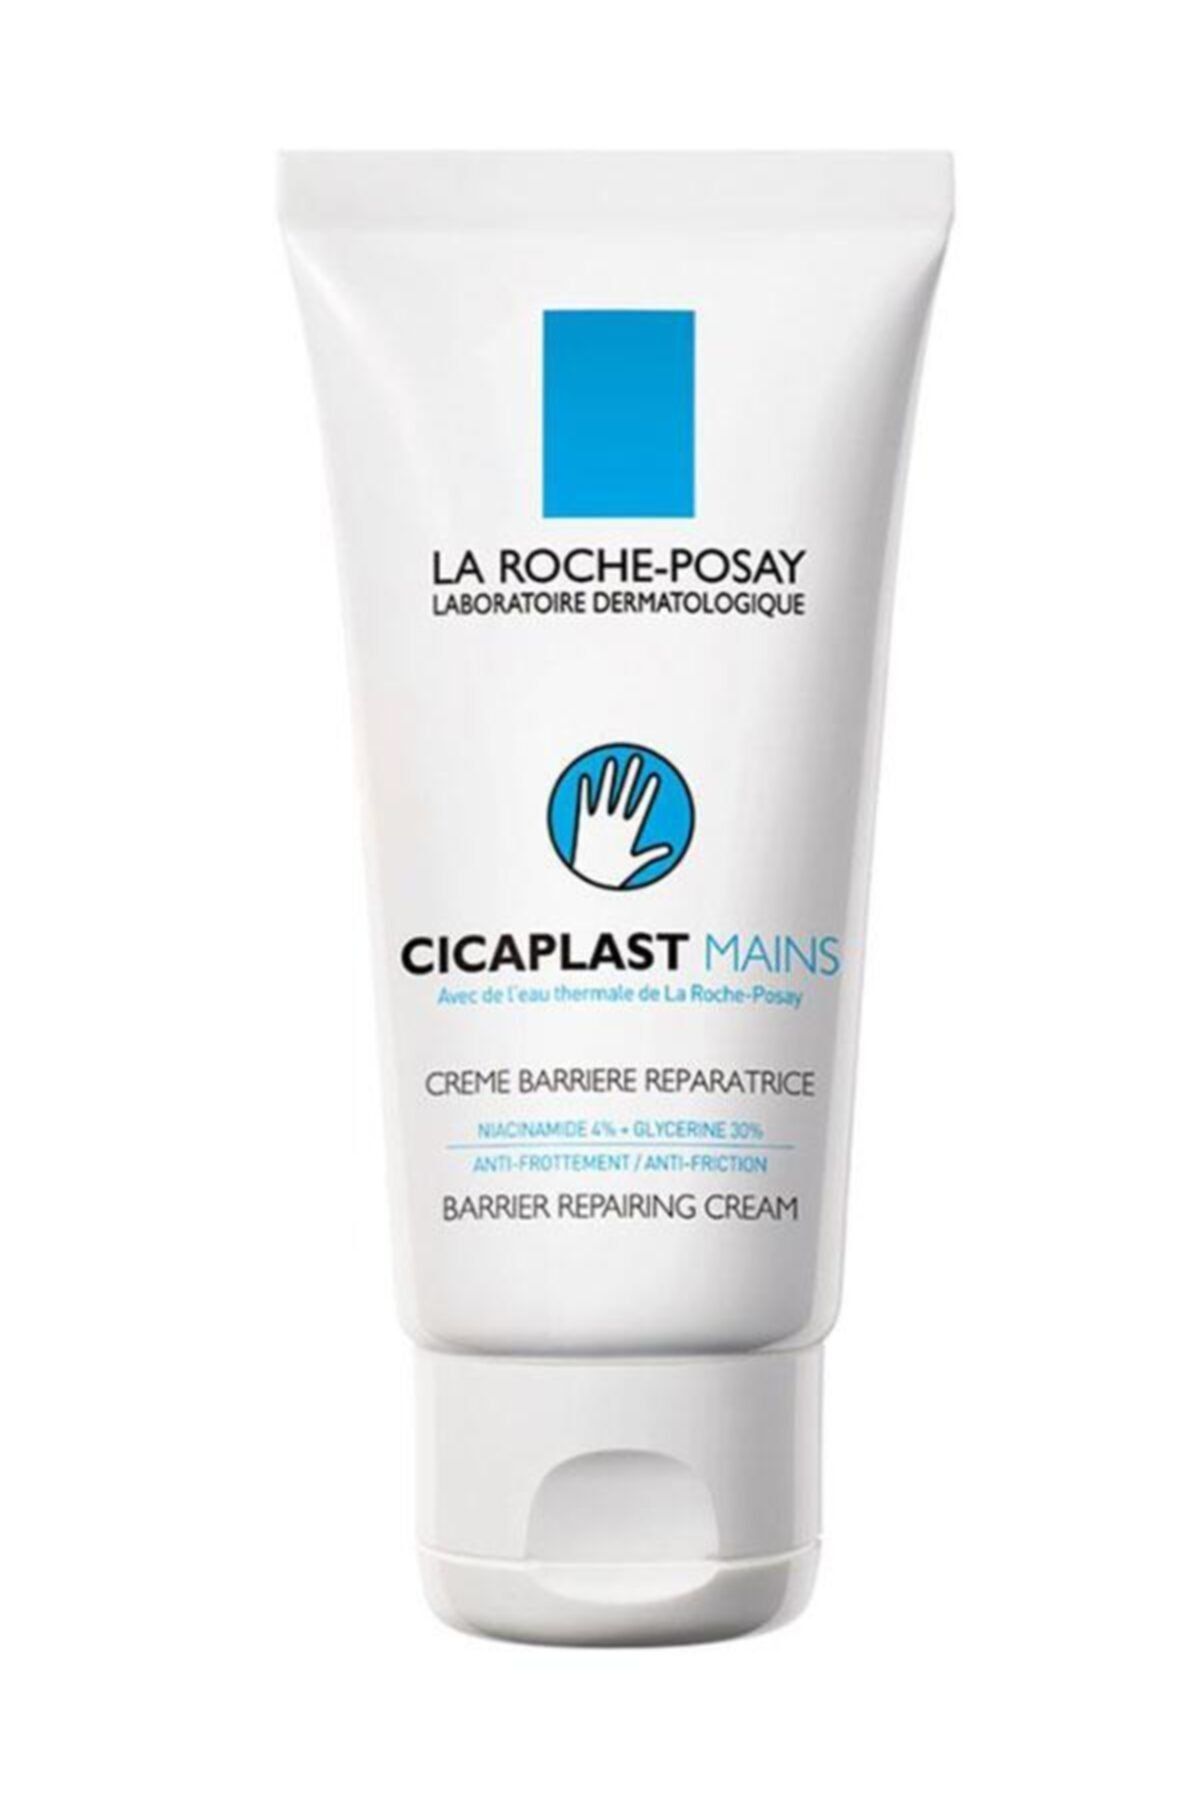 La Roche Posay La Roche-posay Cicaplast Mains 50ml | Onarıcı El Kremi